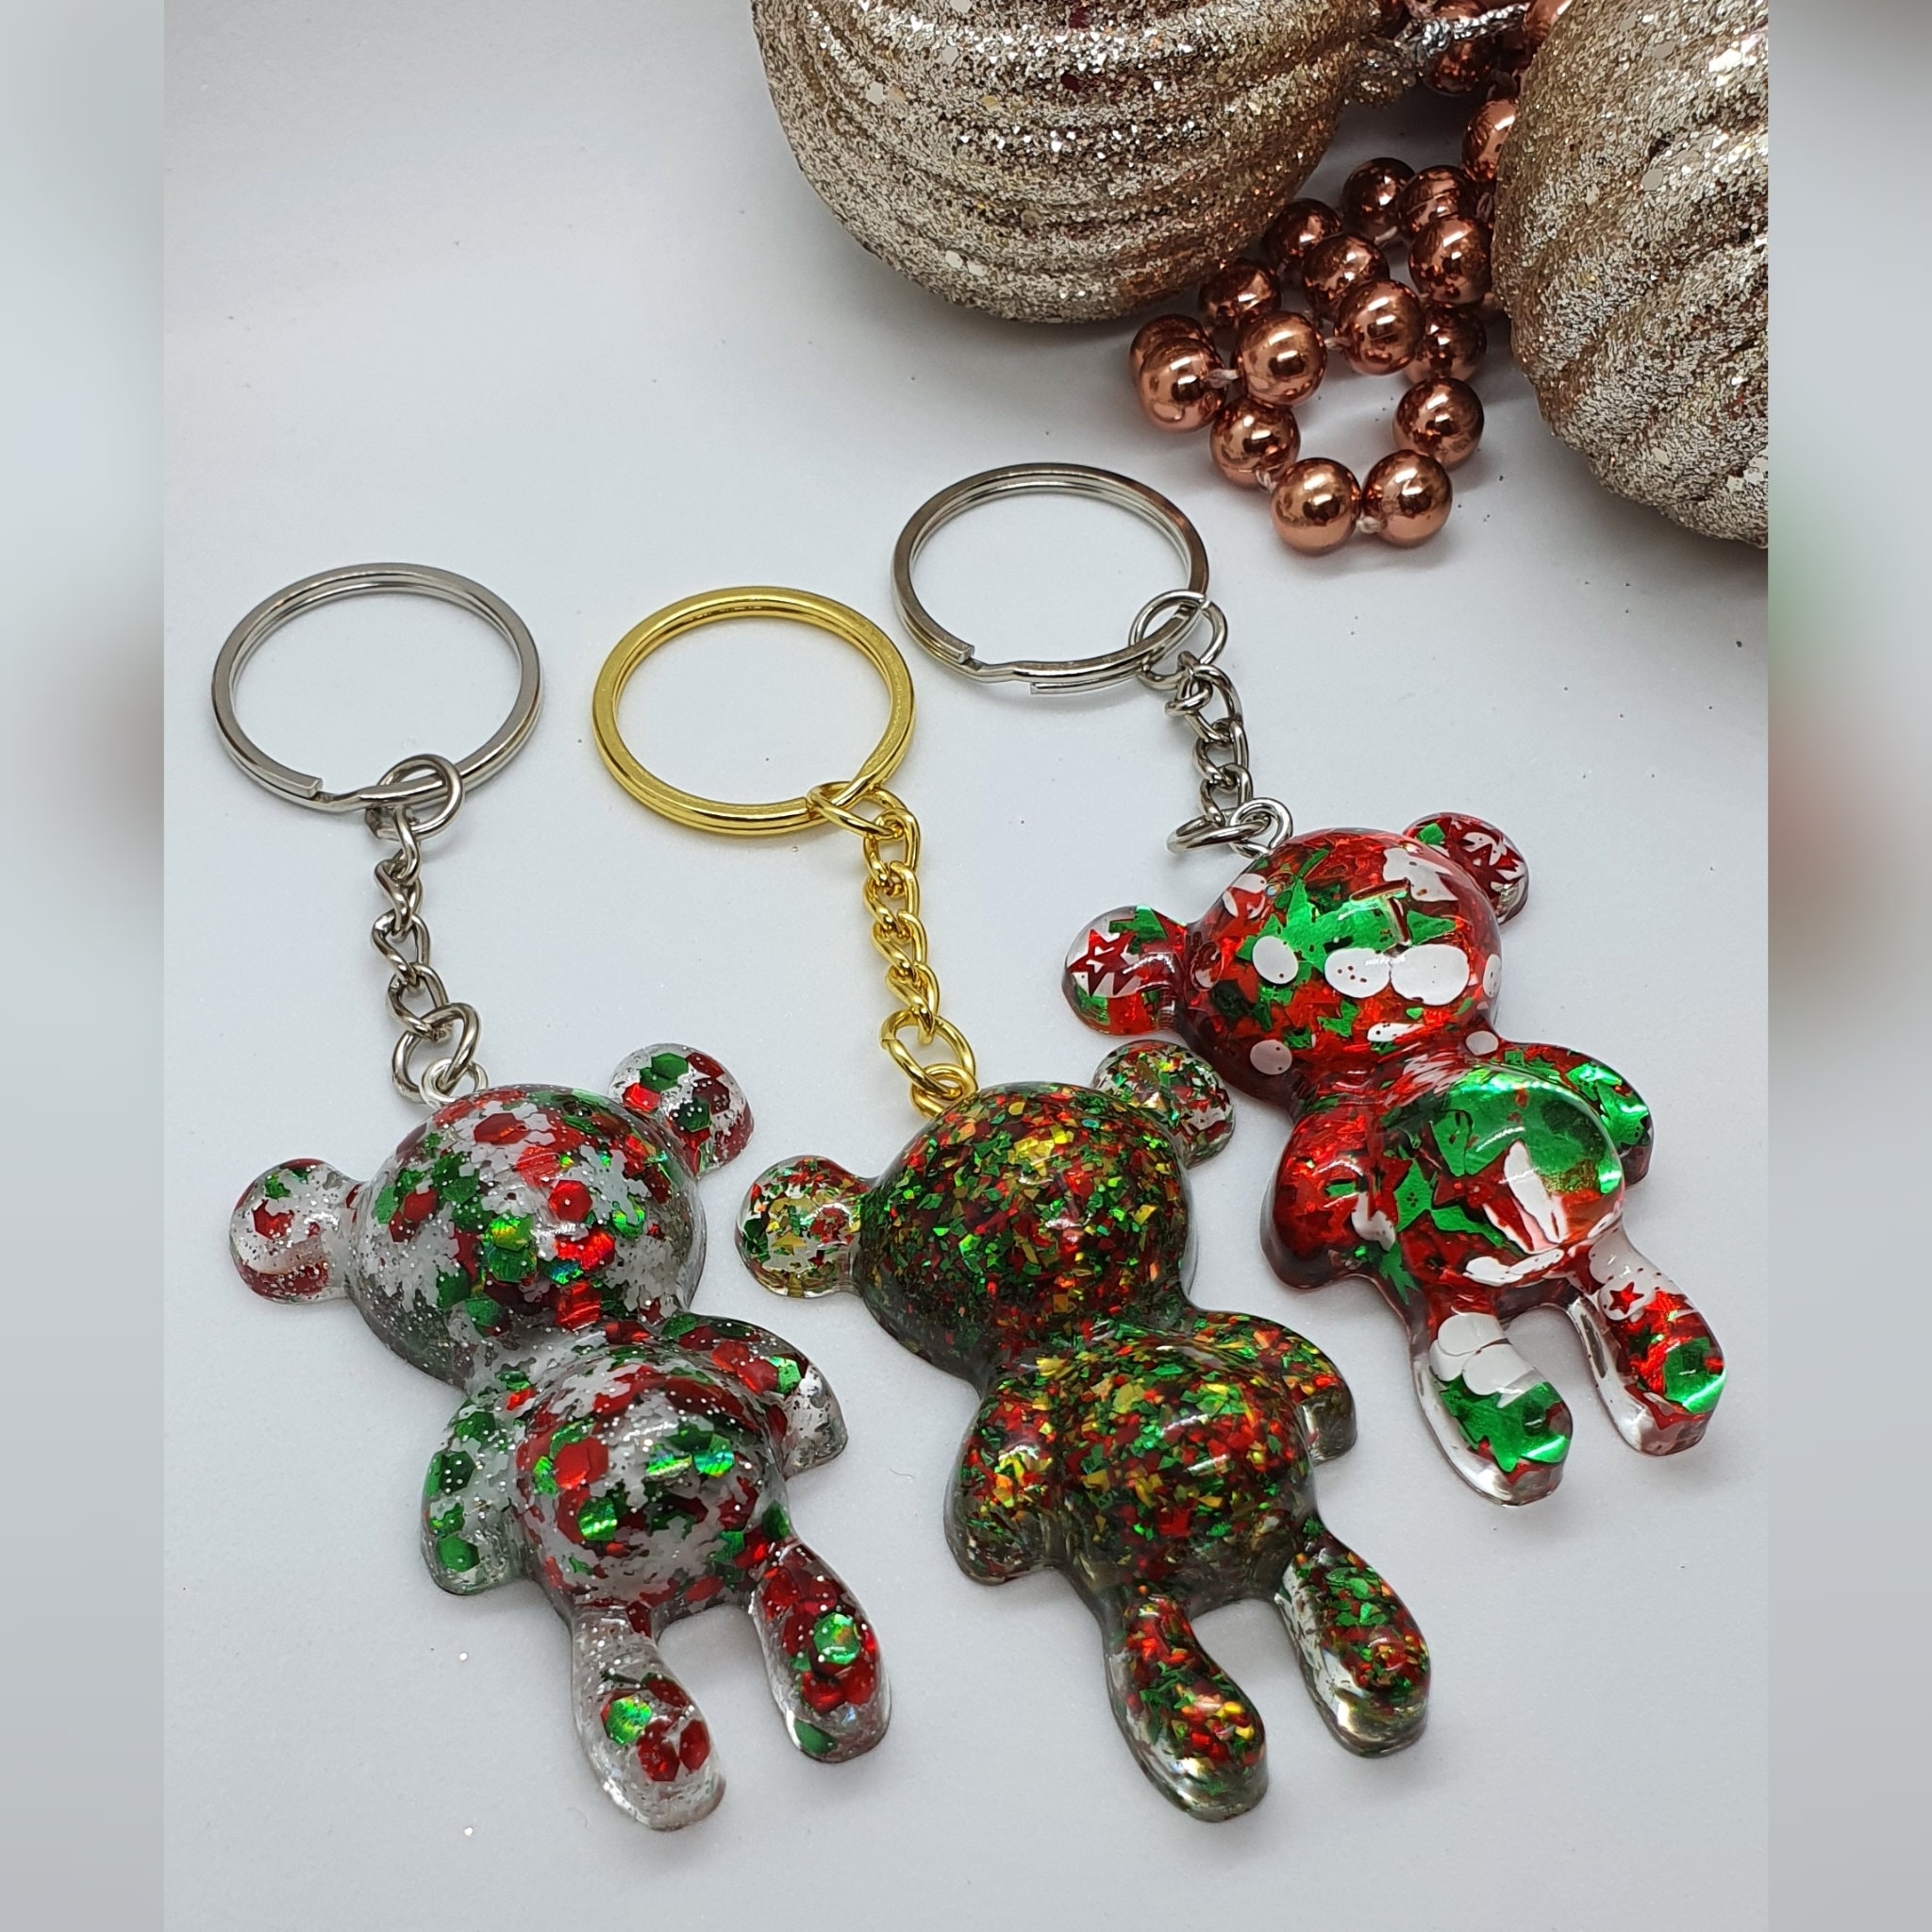 Cute Bear Key Chain Resin Bow Bell Rabbit Keychain Weaving Fashion Doll Bag  Pendant Holiday Car Key Ring For Girls Gift